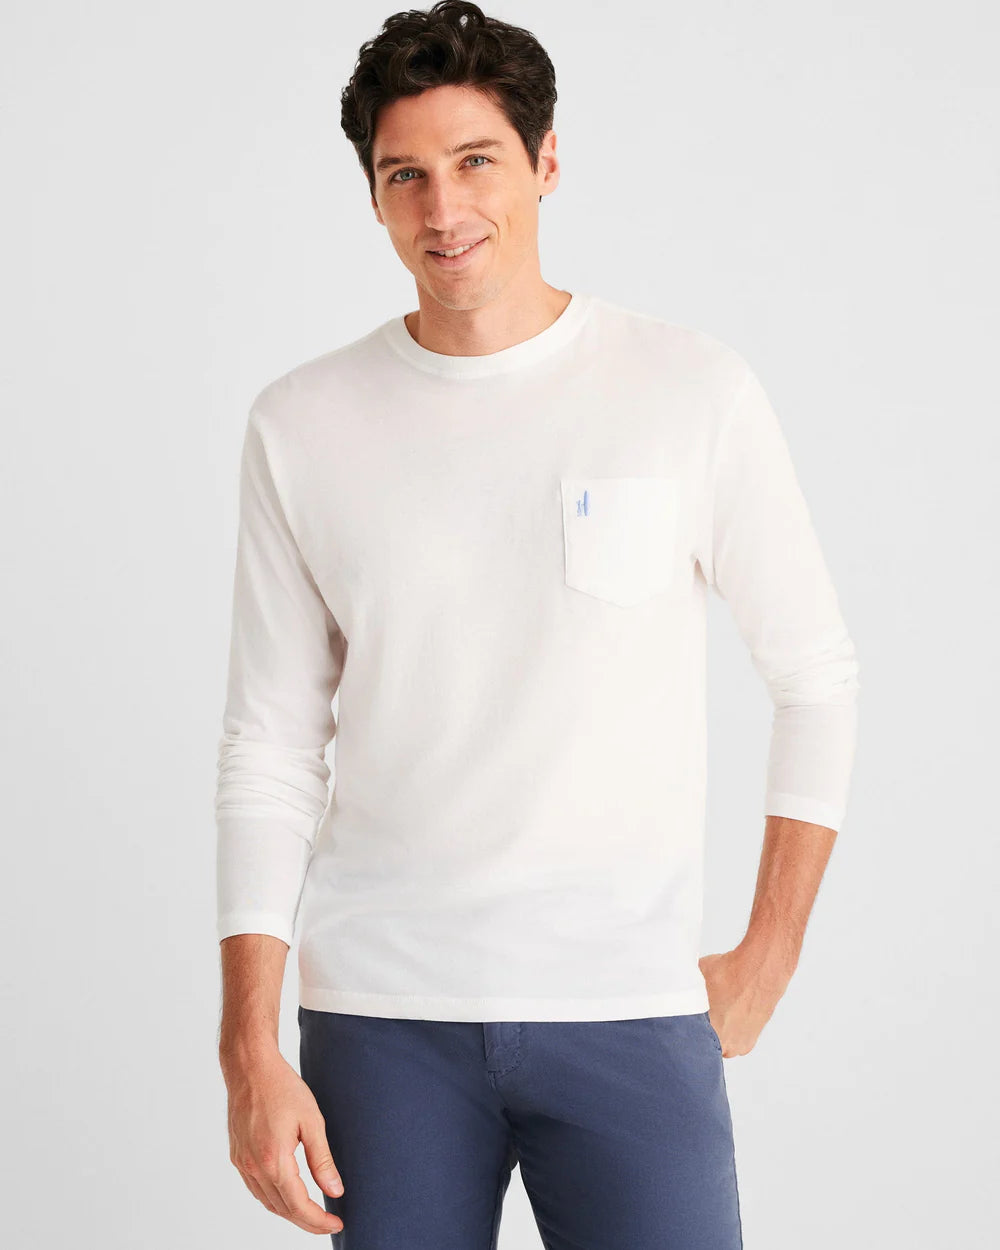 Brennan Long Sleeve T-Shirt in White